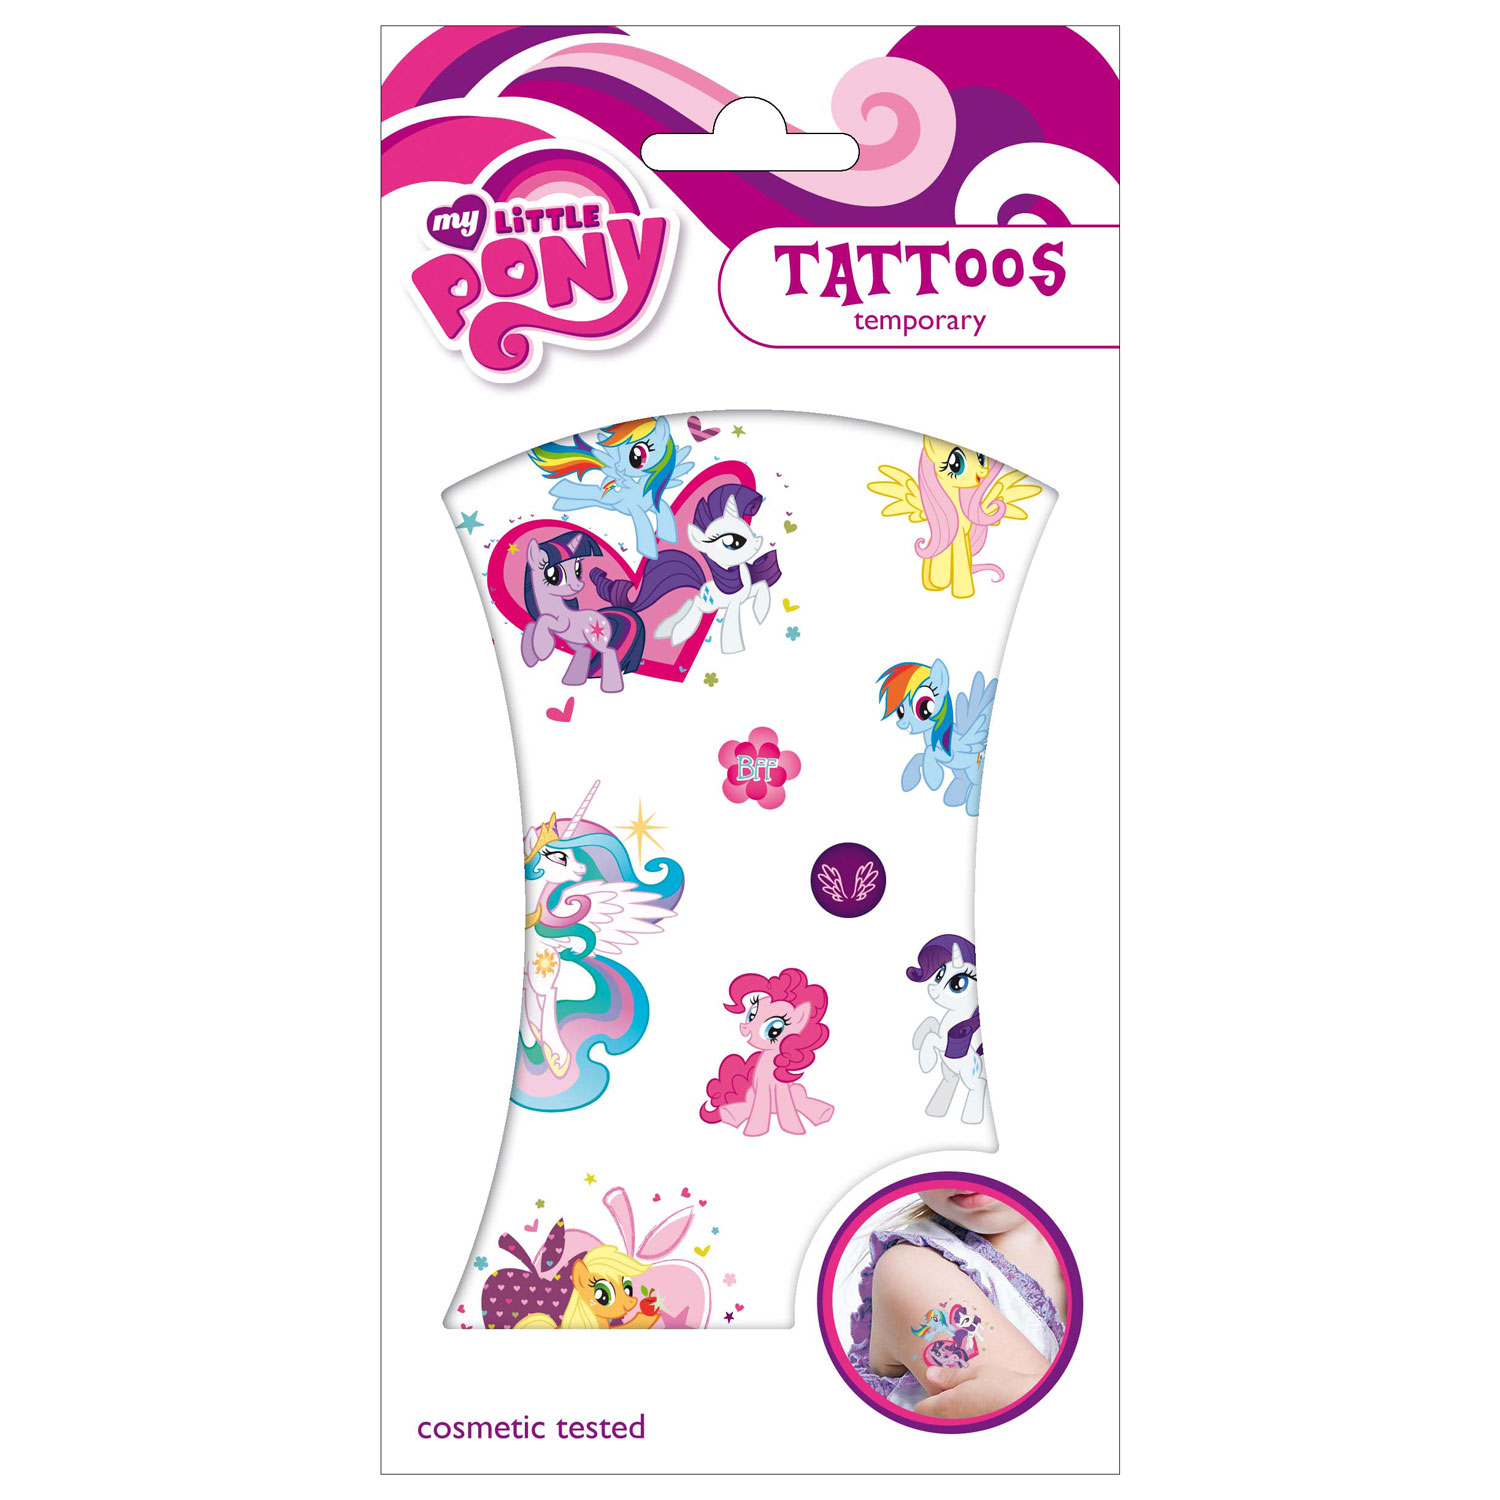 Tattoo's - My Little Pony